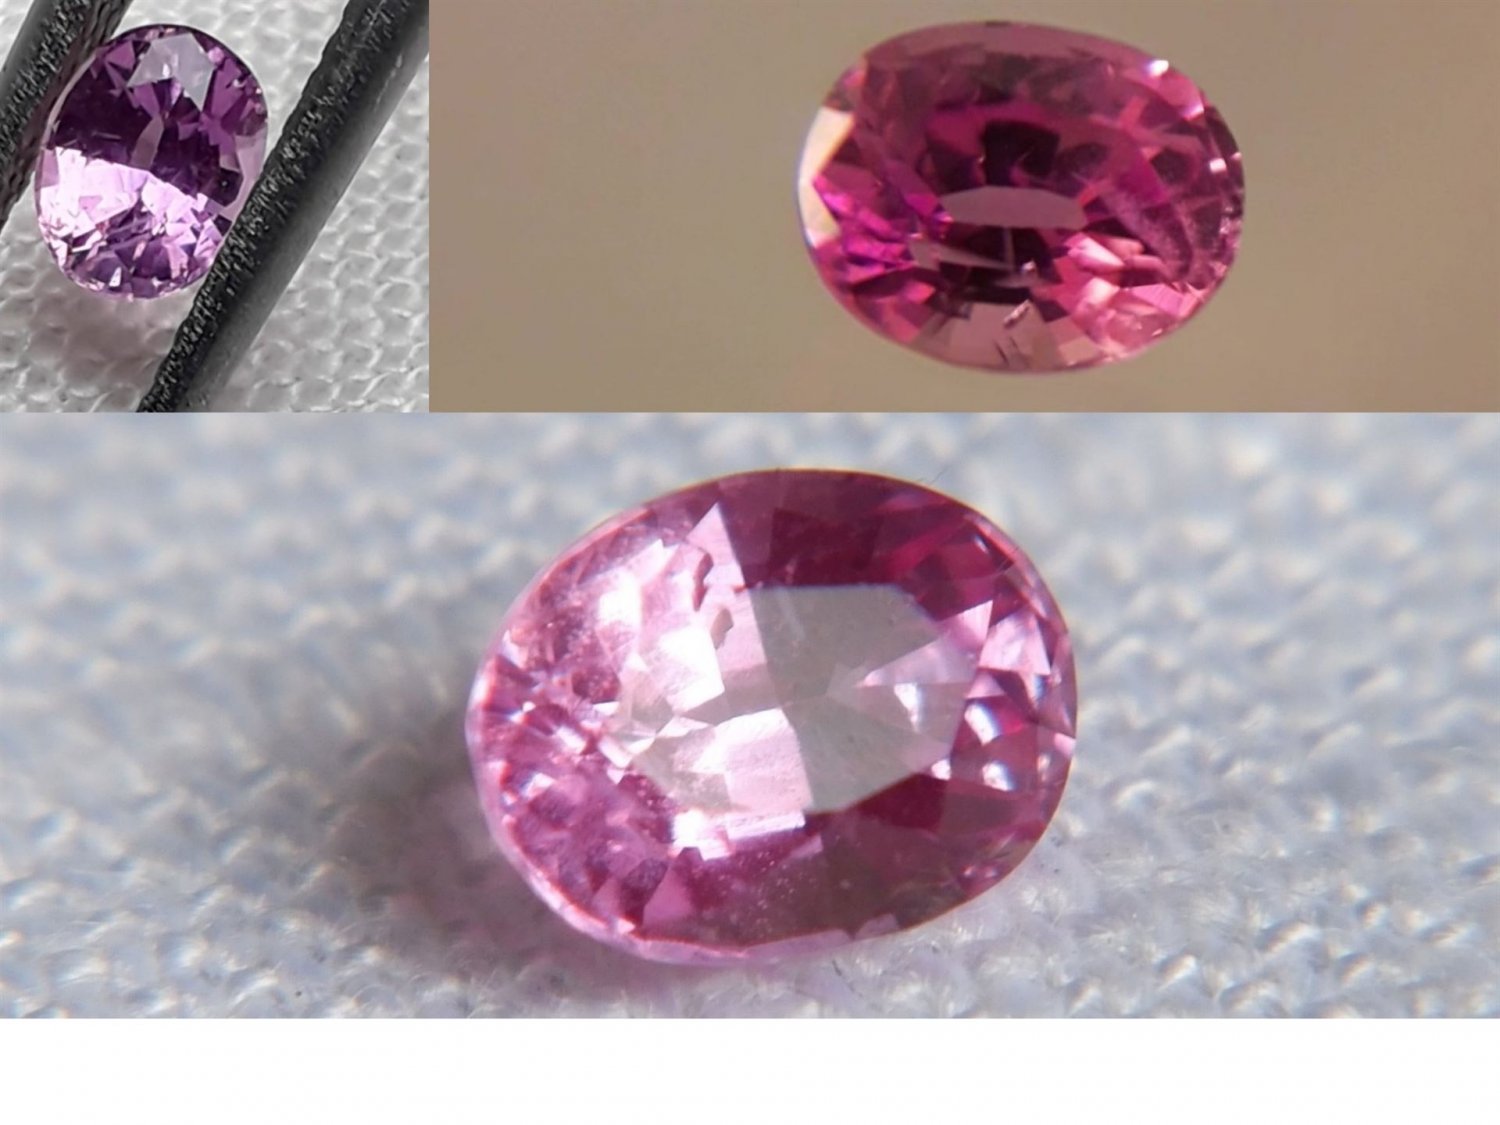 0.56 ct GIA Genuine vivid pink Sapphire| GIA Premium handcrafted oval cut Sri Lanka